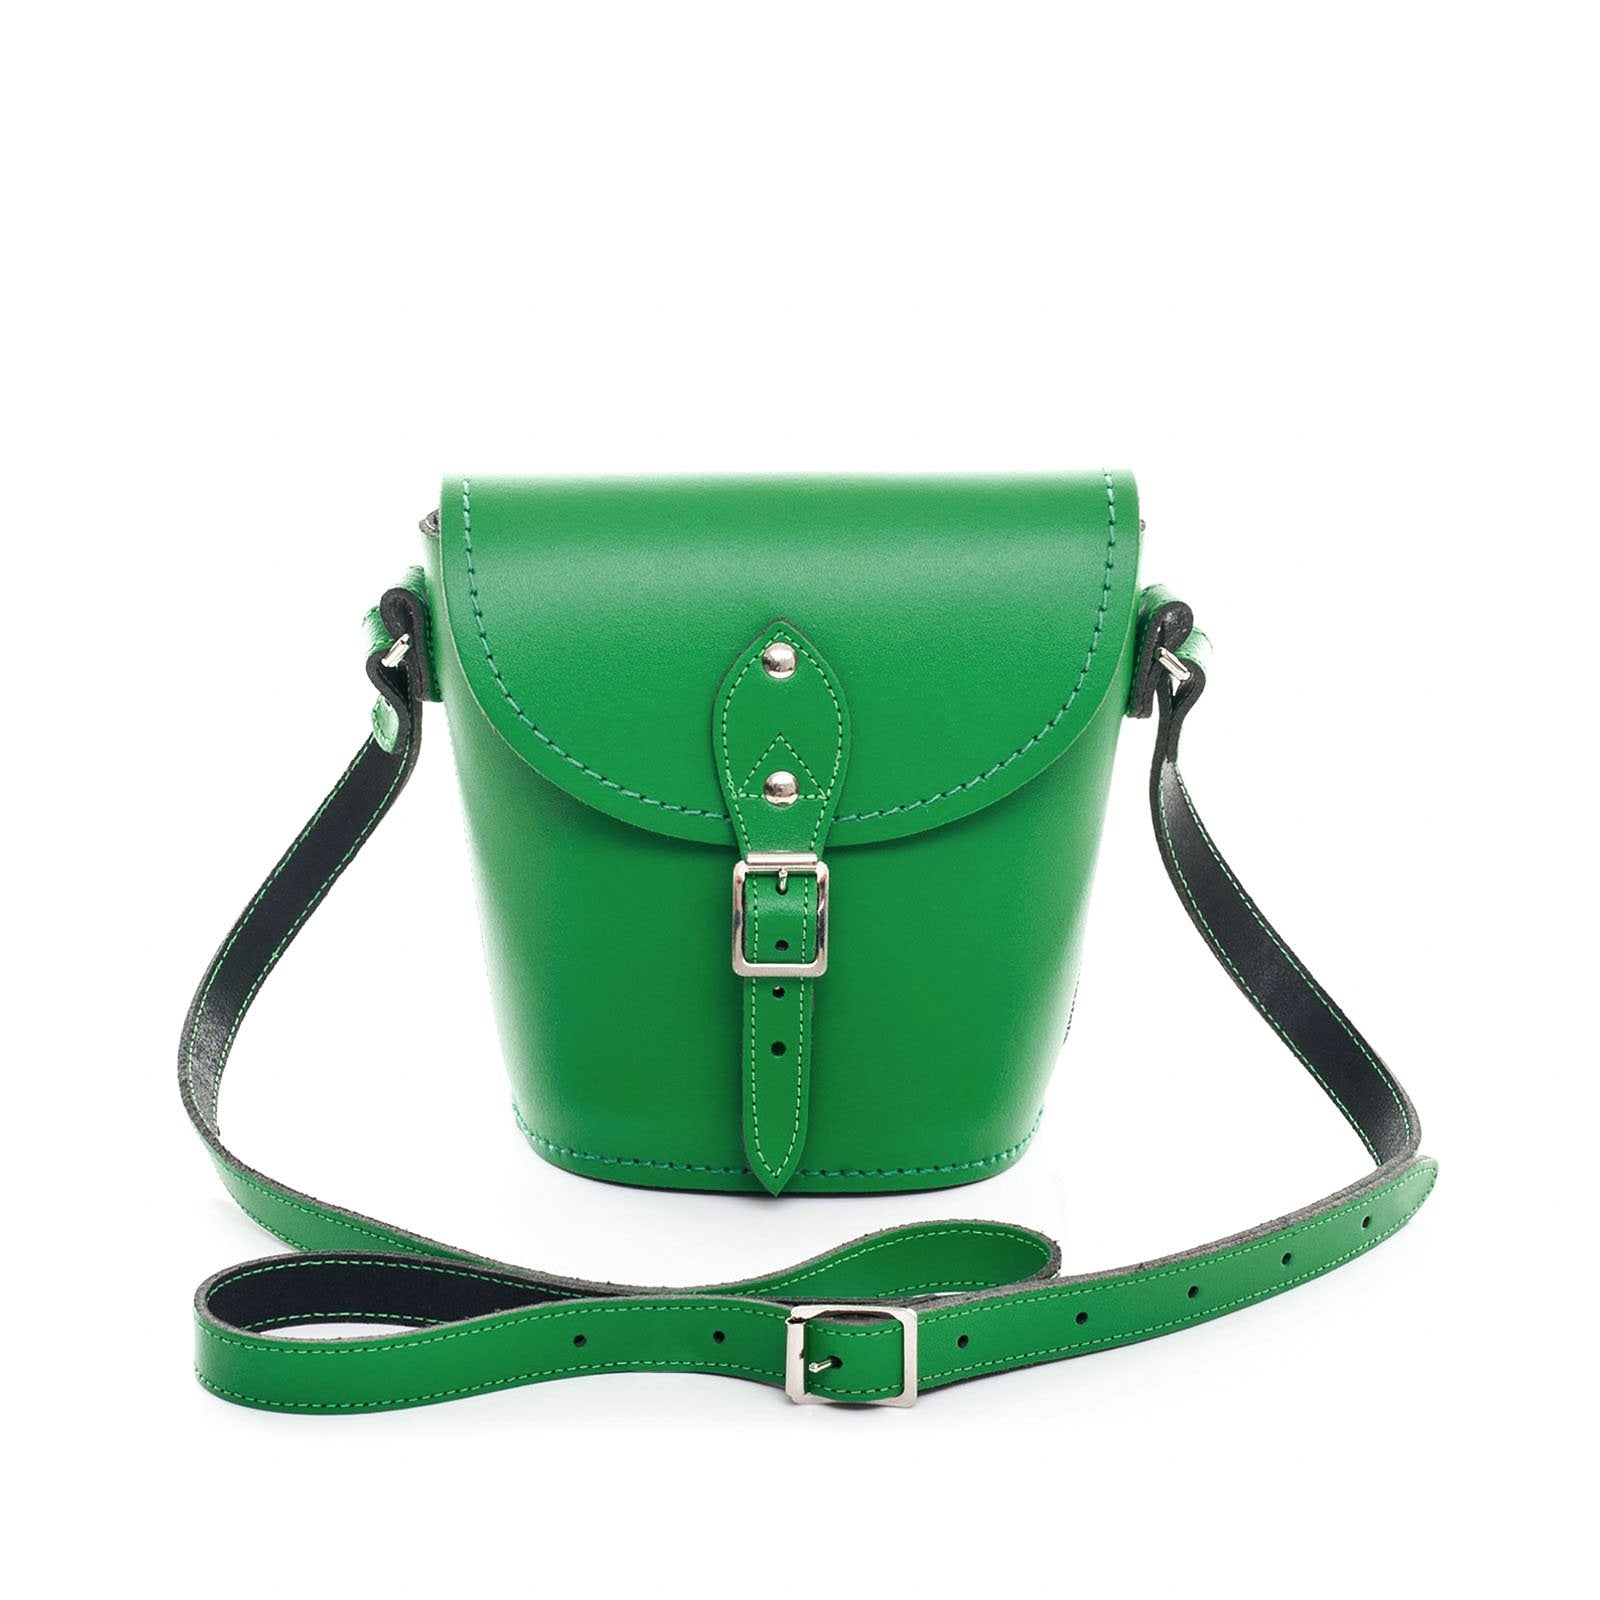 Handmade Leather Barrel Bag - Green - Small